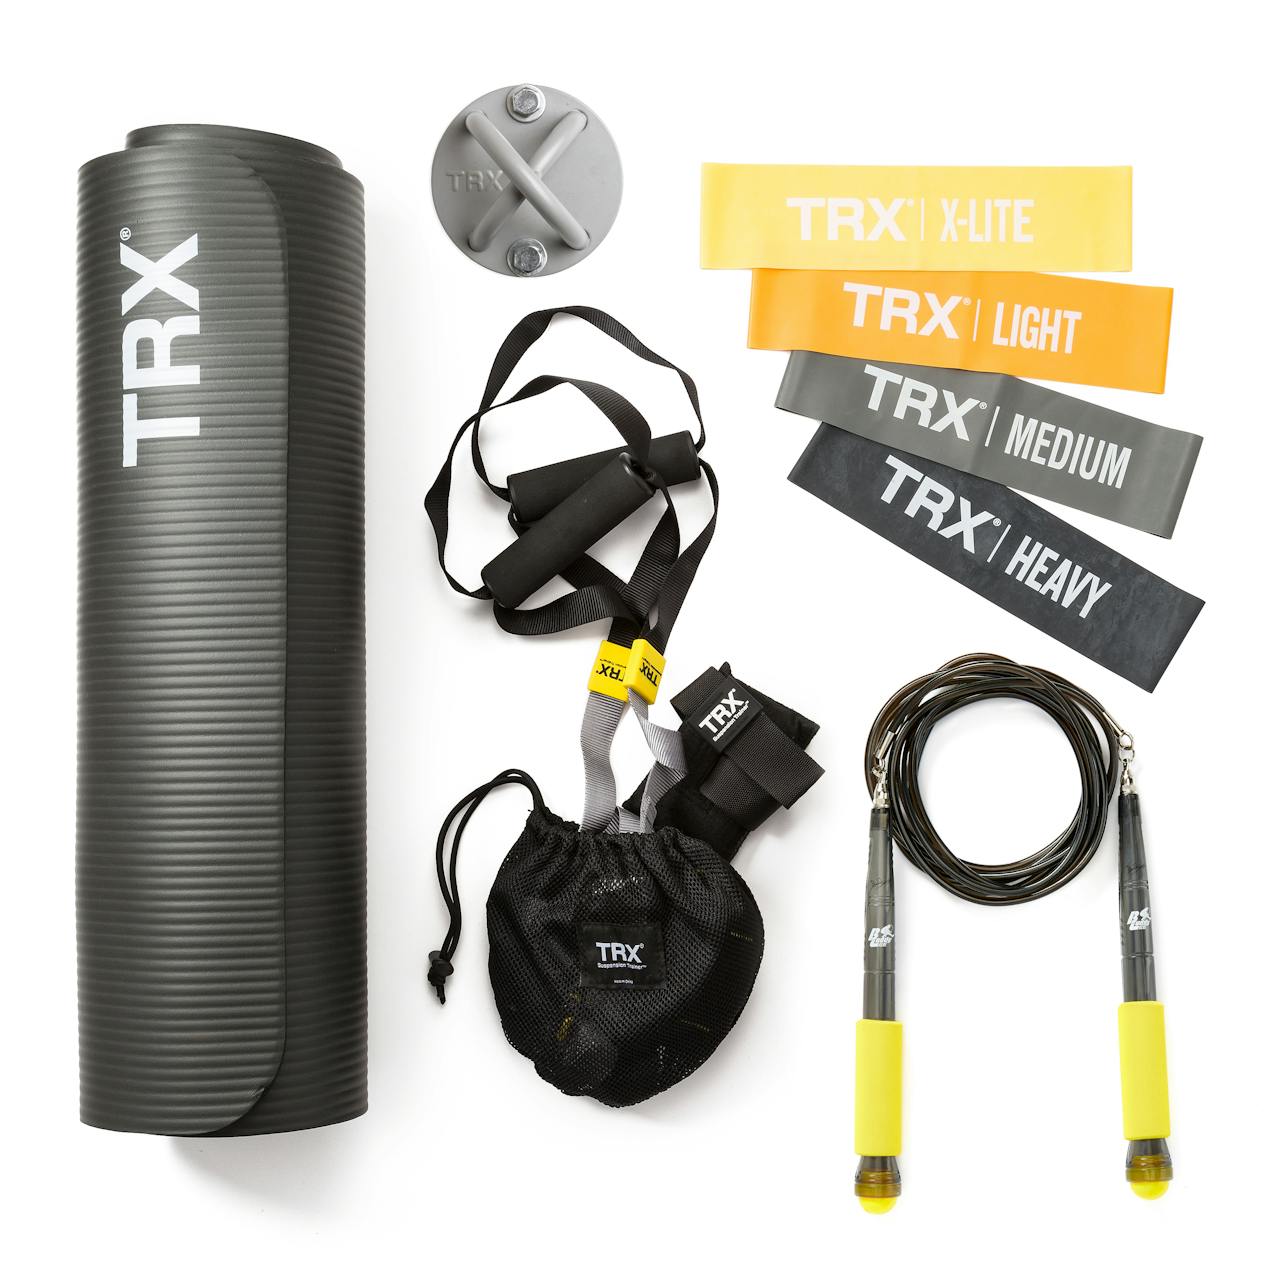 TRX Small Space Set - Huckberry Exclusive Bundle